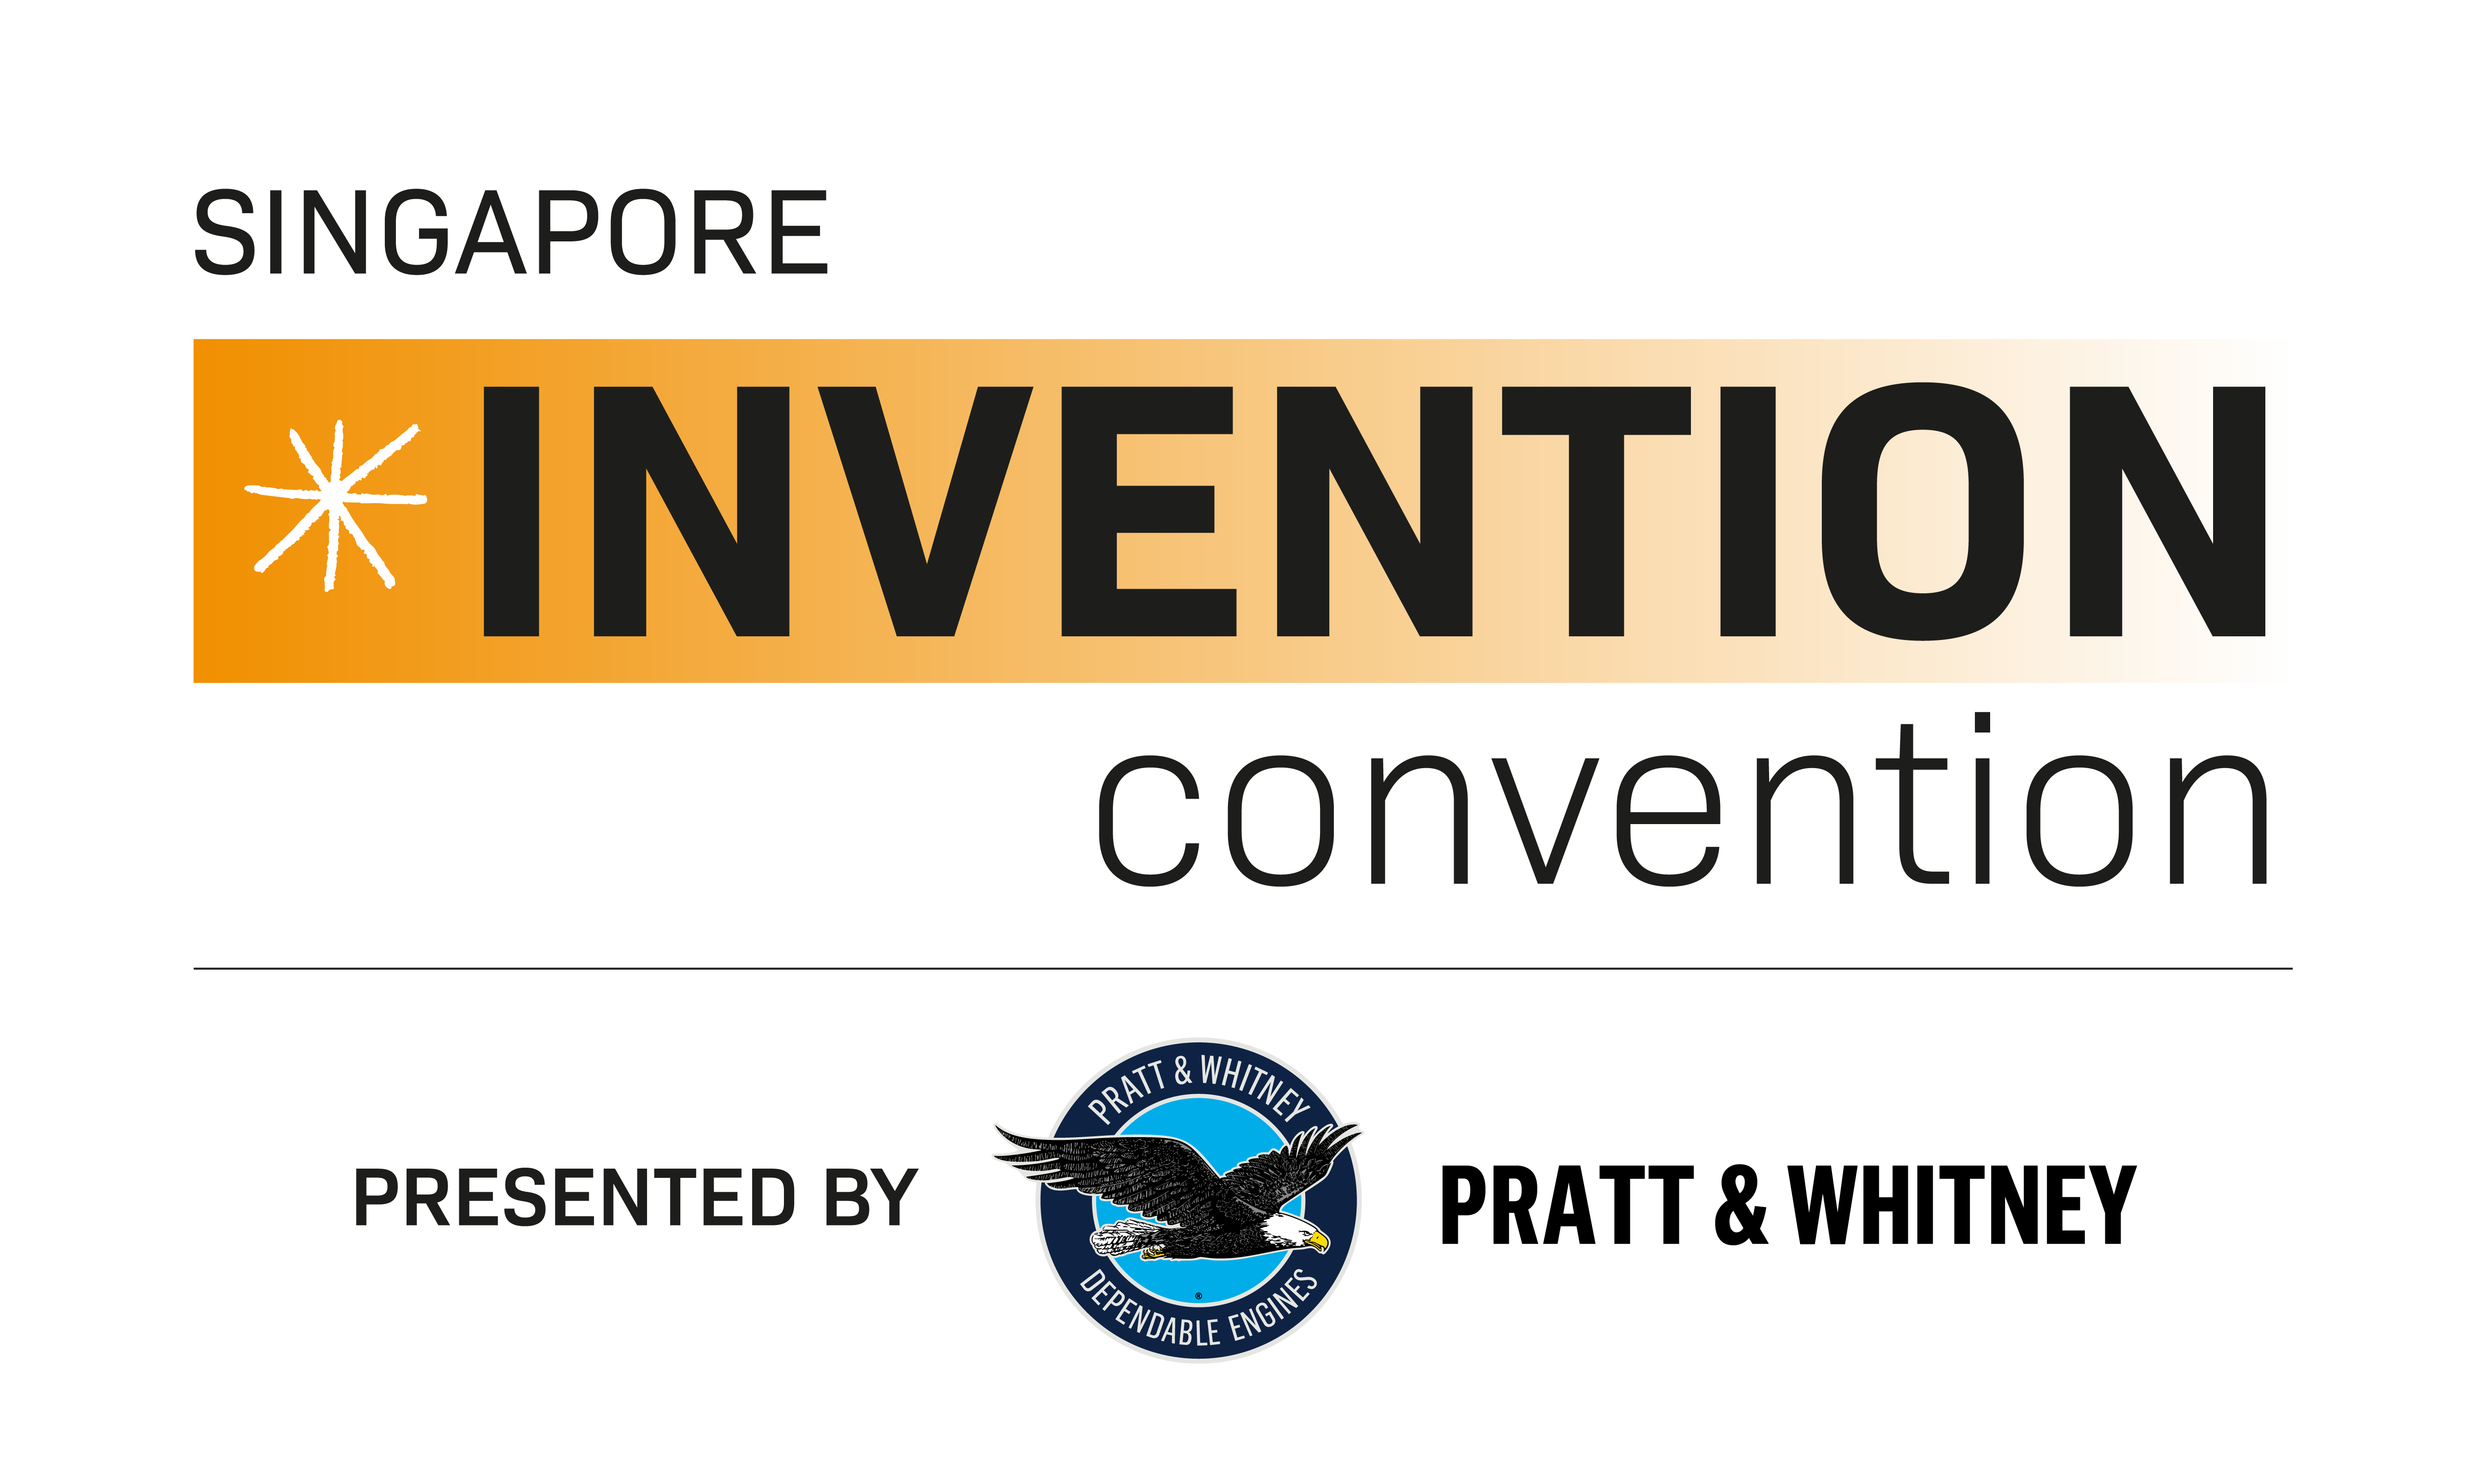 Singapore Invention Convention